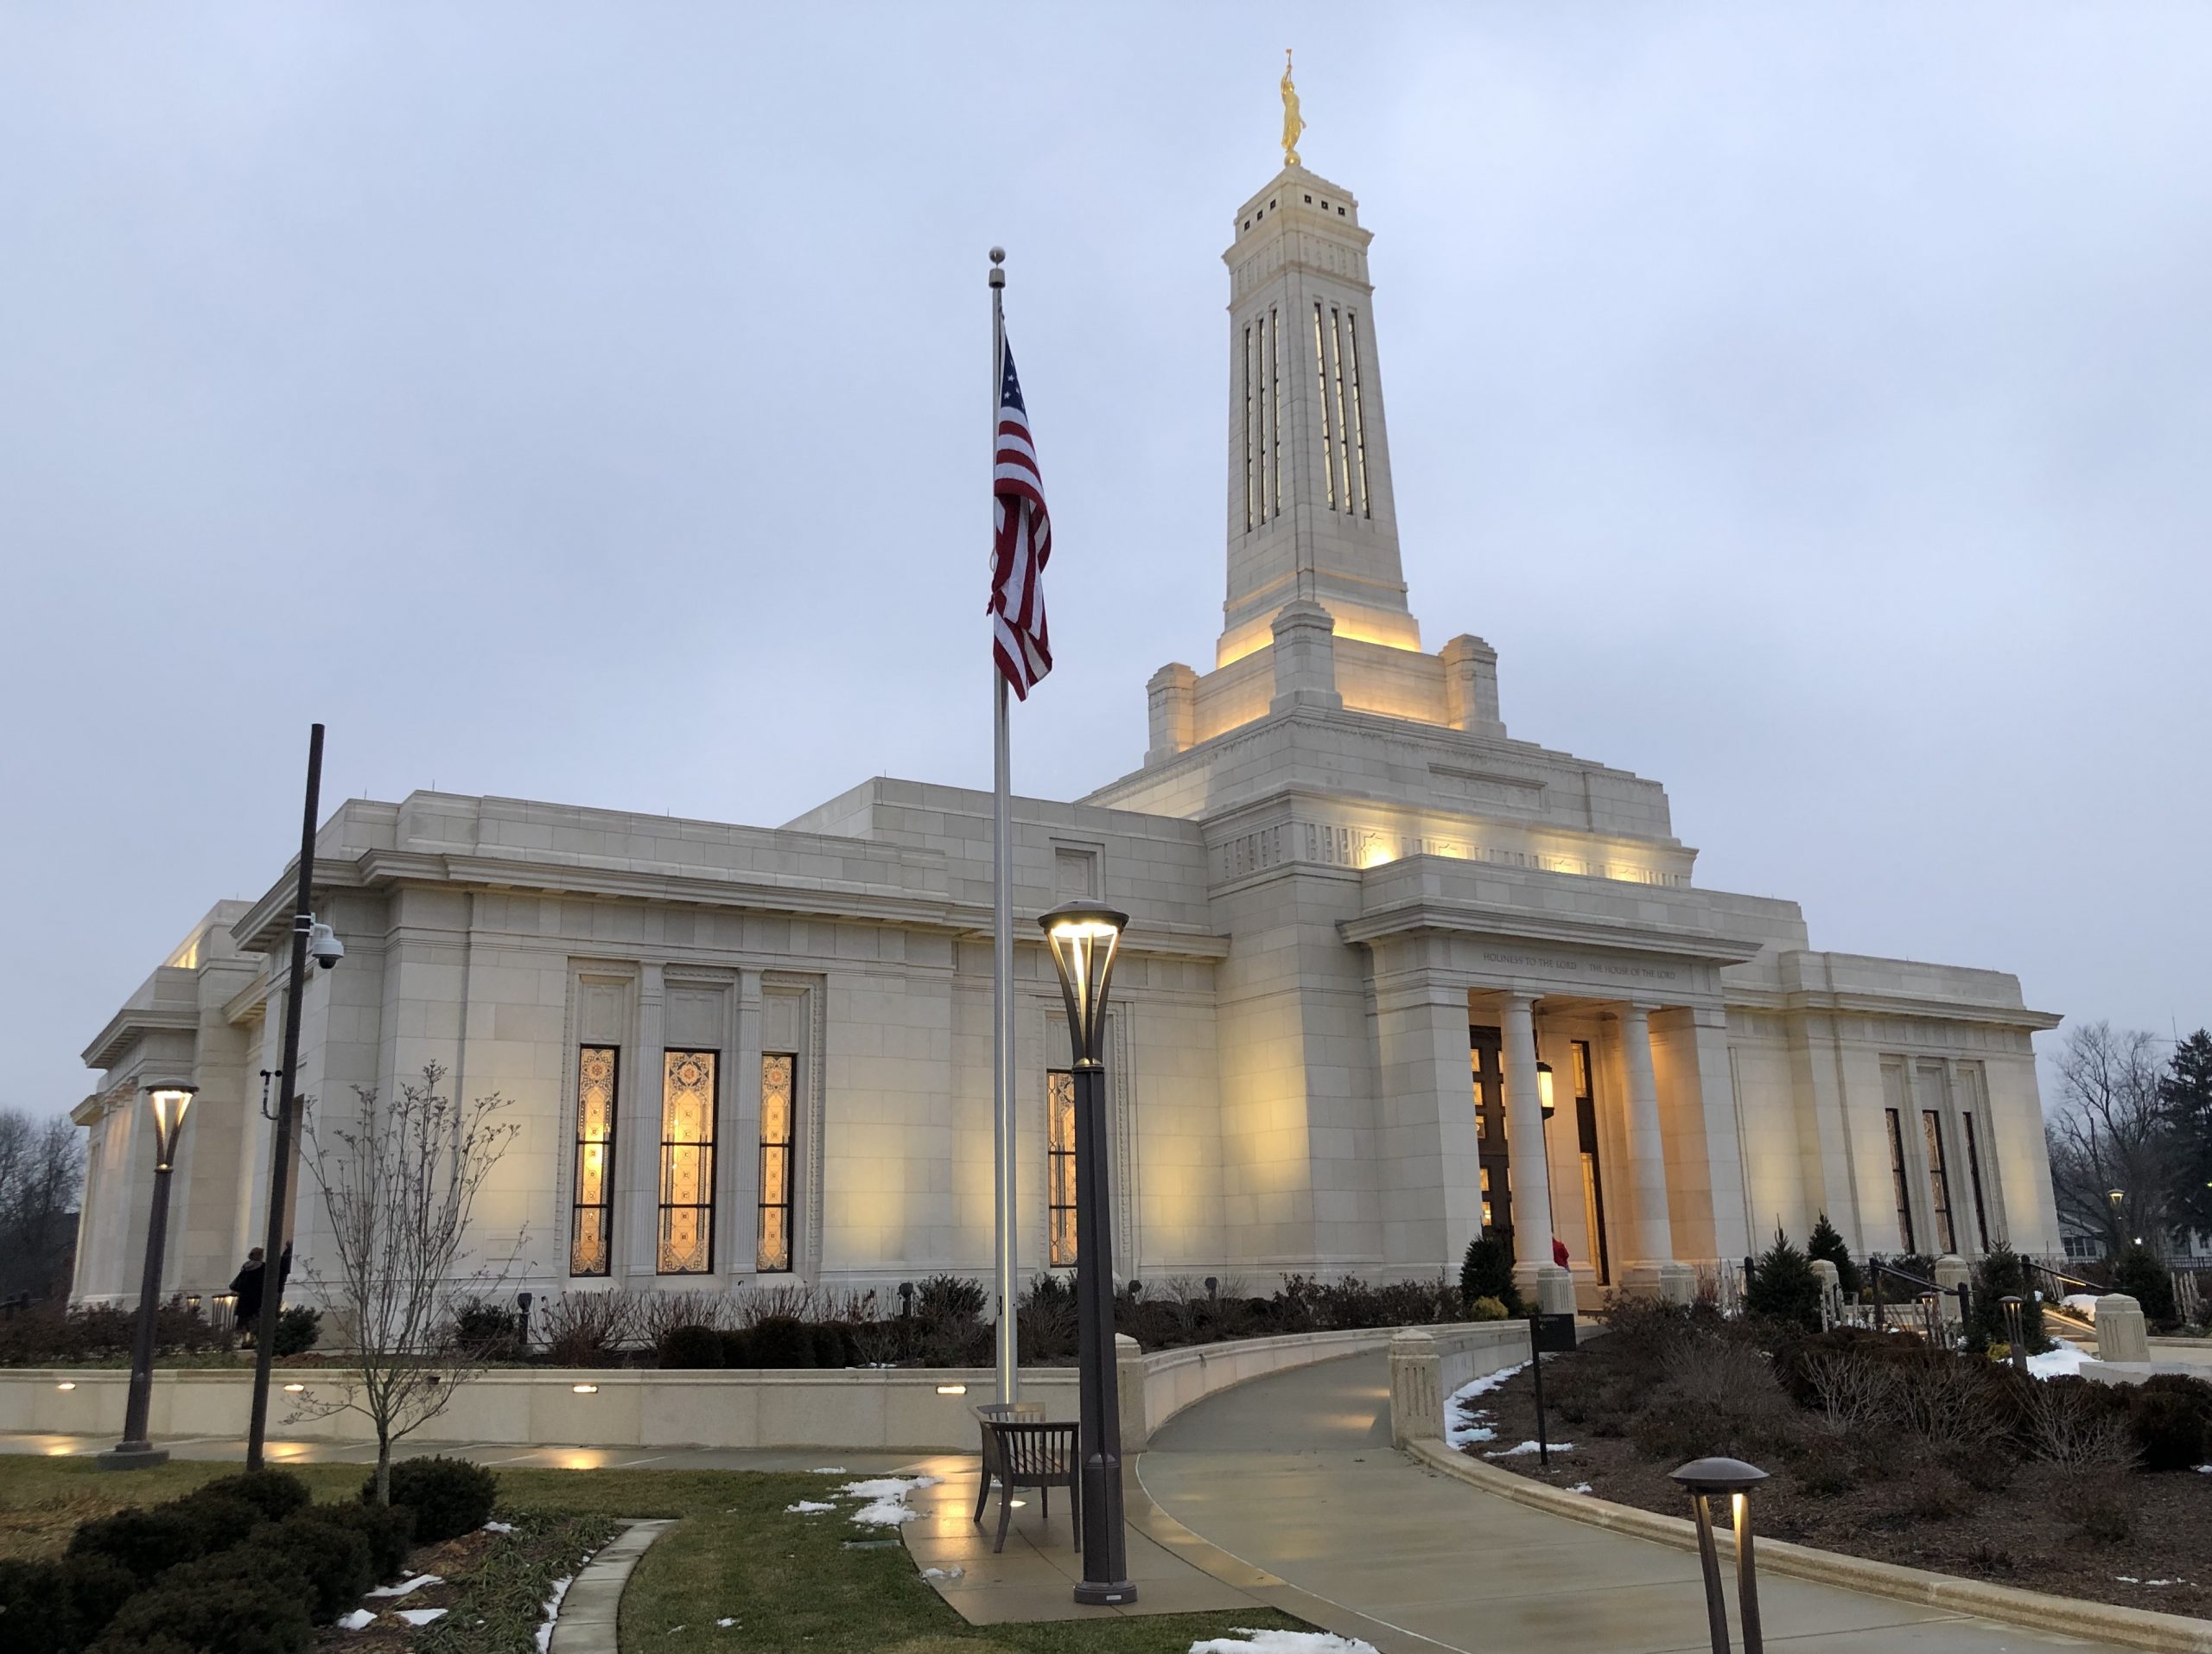 Church of Jesus Christ of Latter-Day Saints (Mormons)